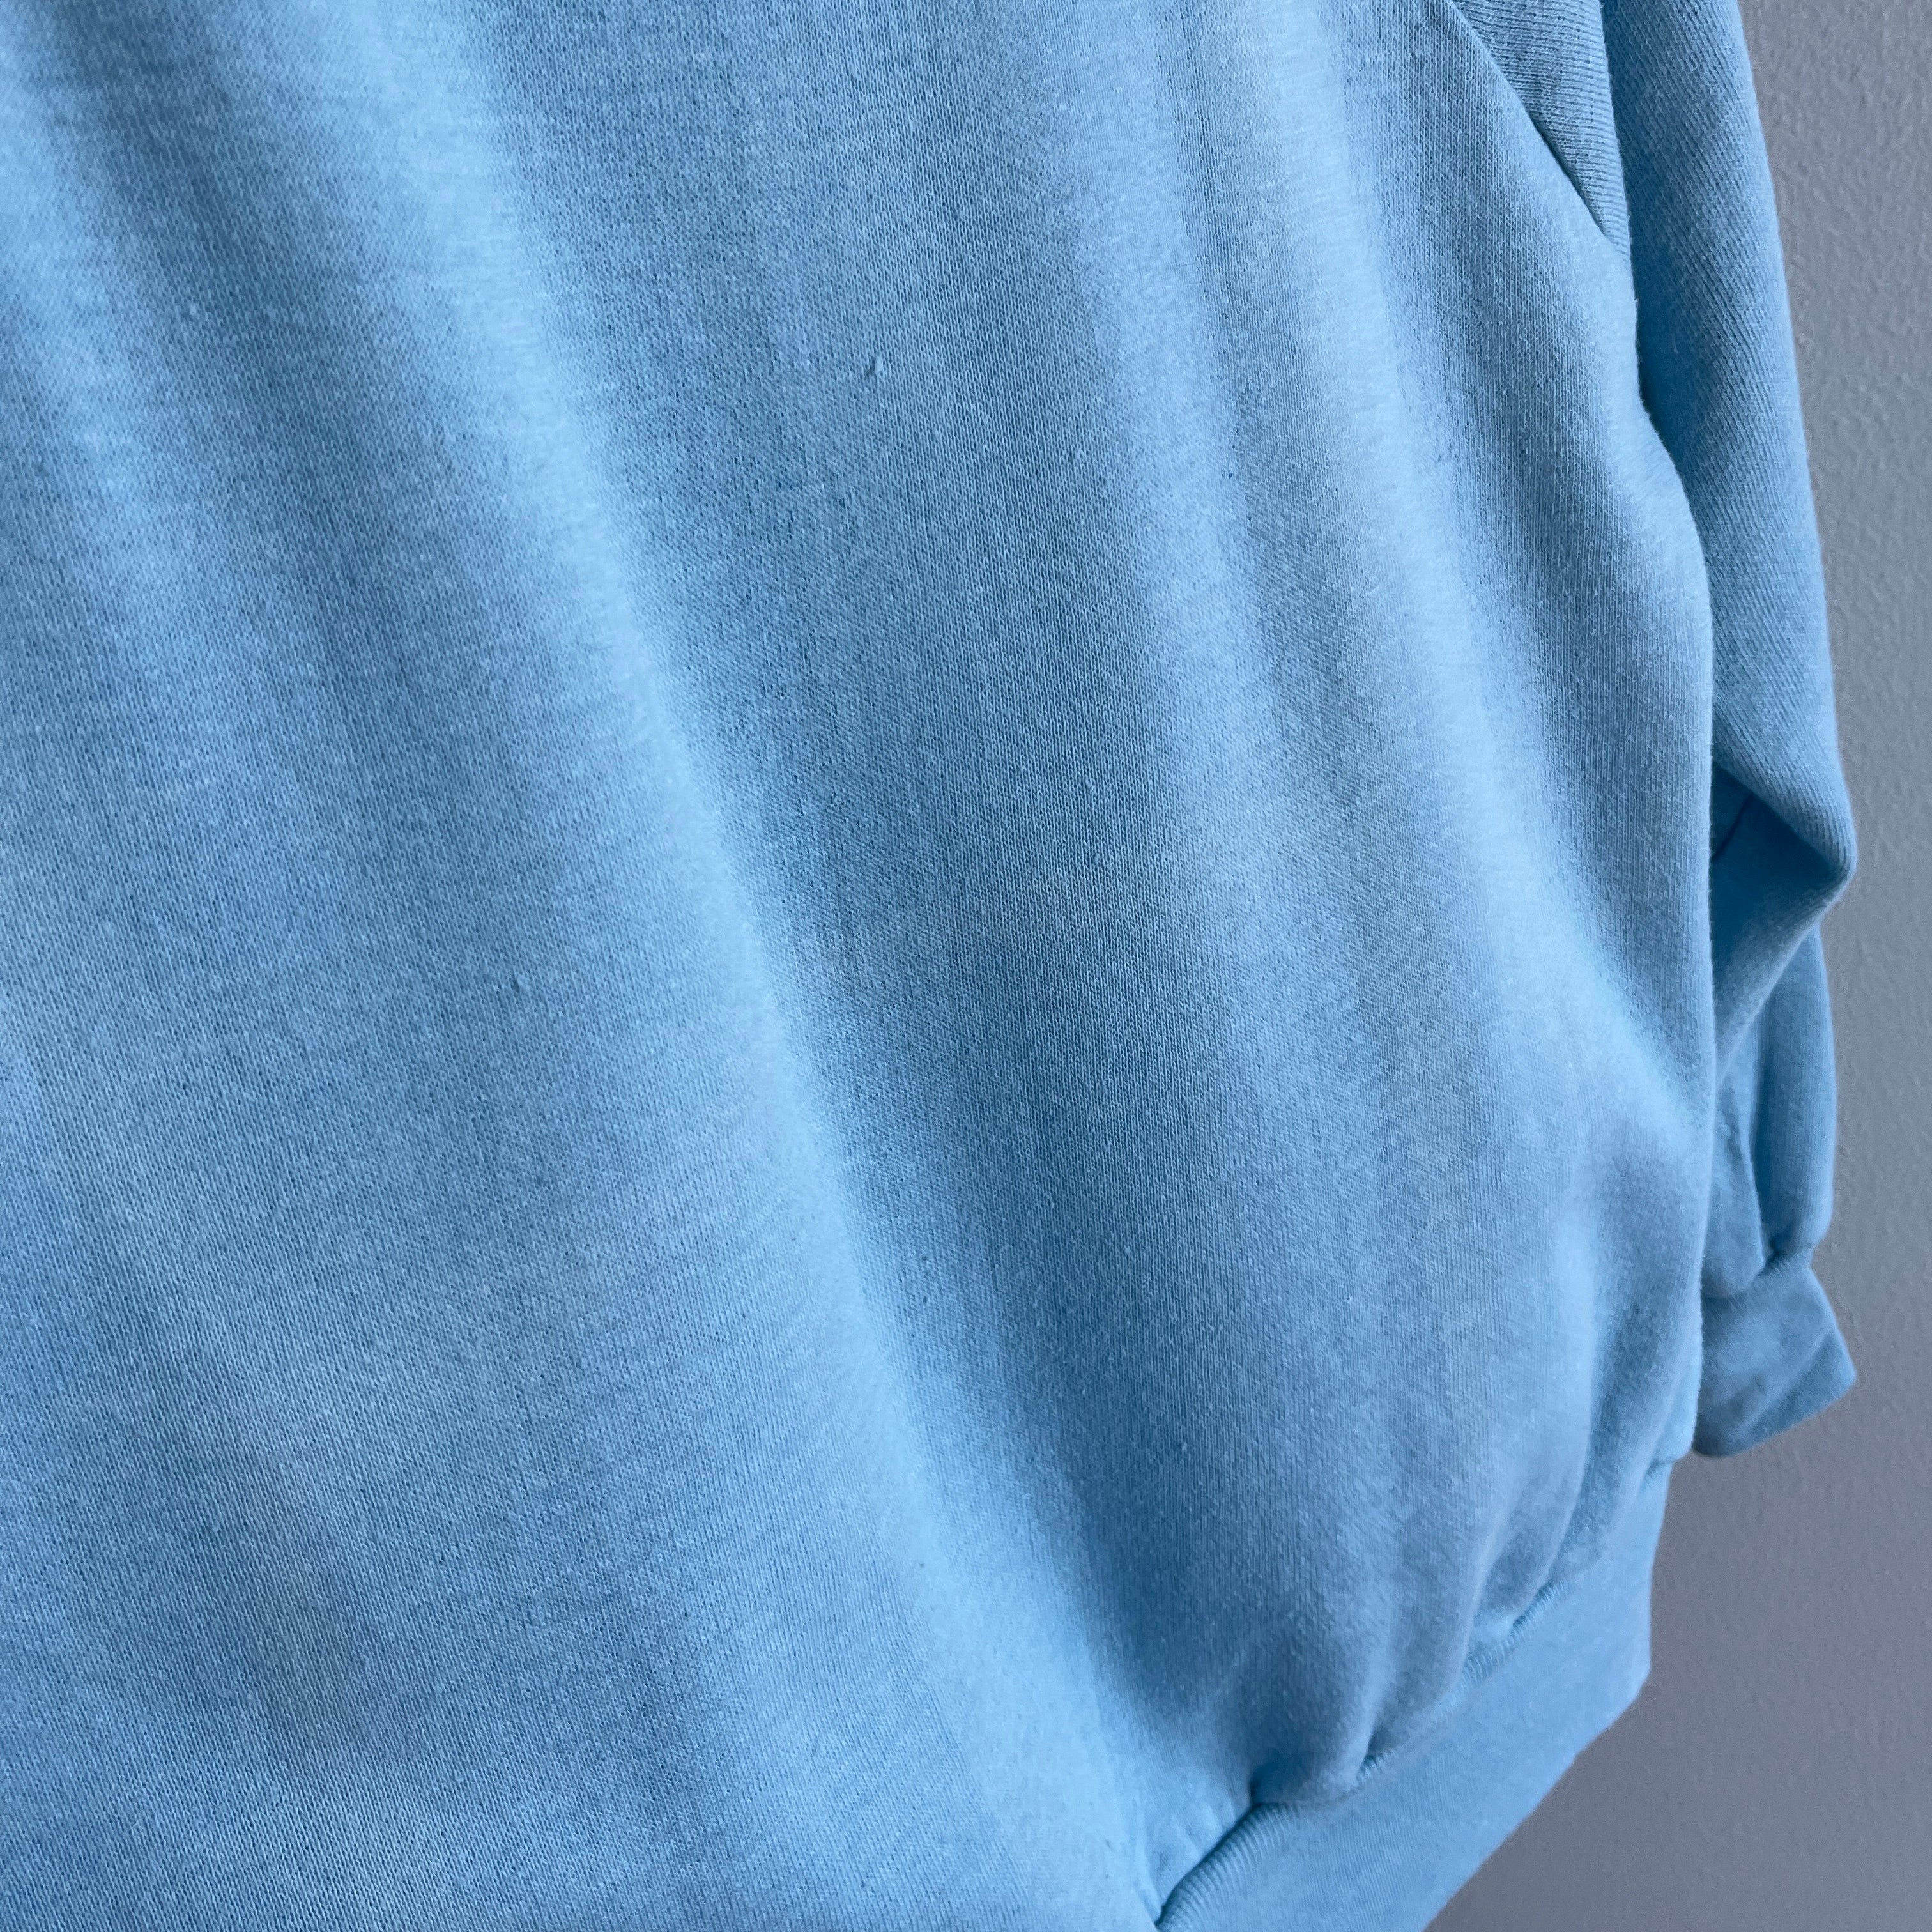 1970/80s Perfectly Soft as a Cloud Blue Raglan Sweatshirt